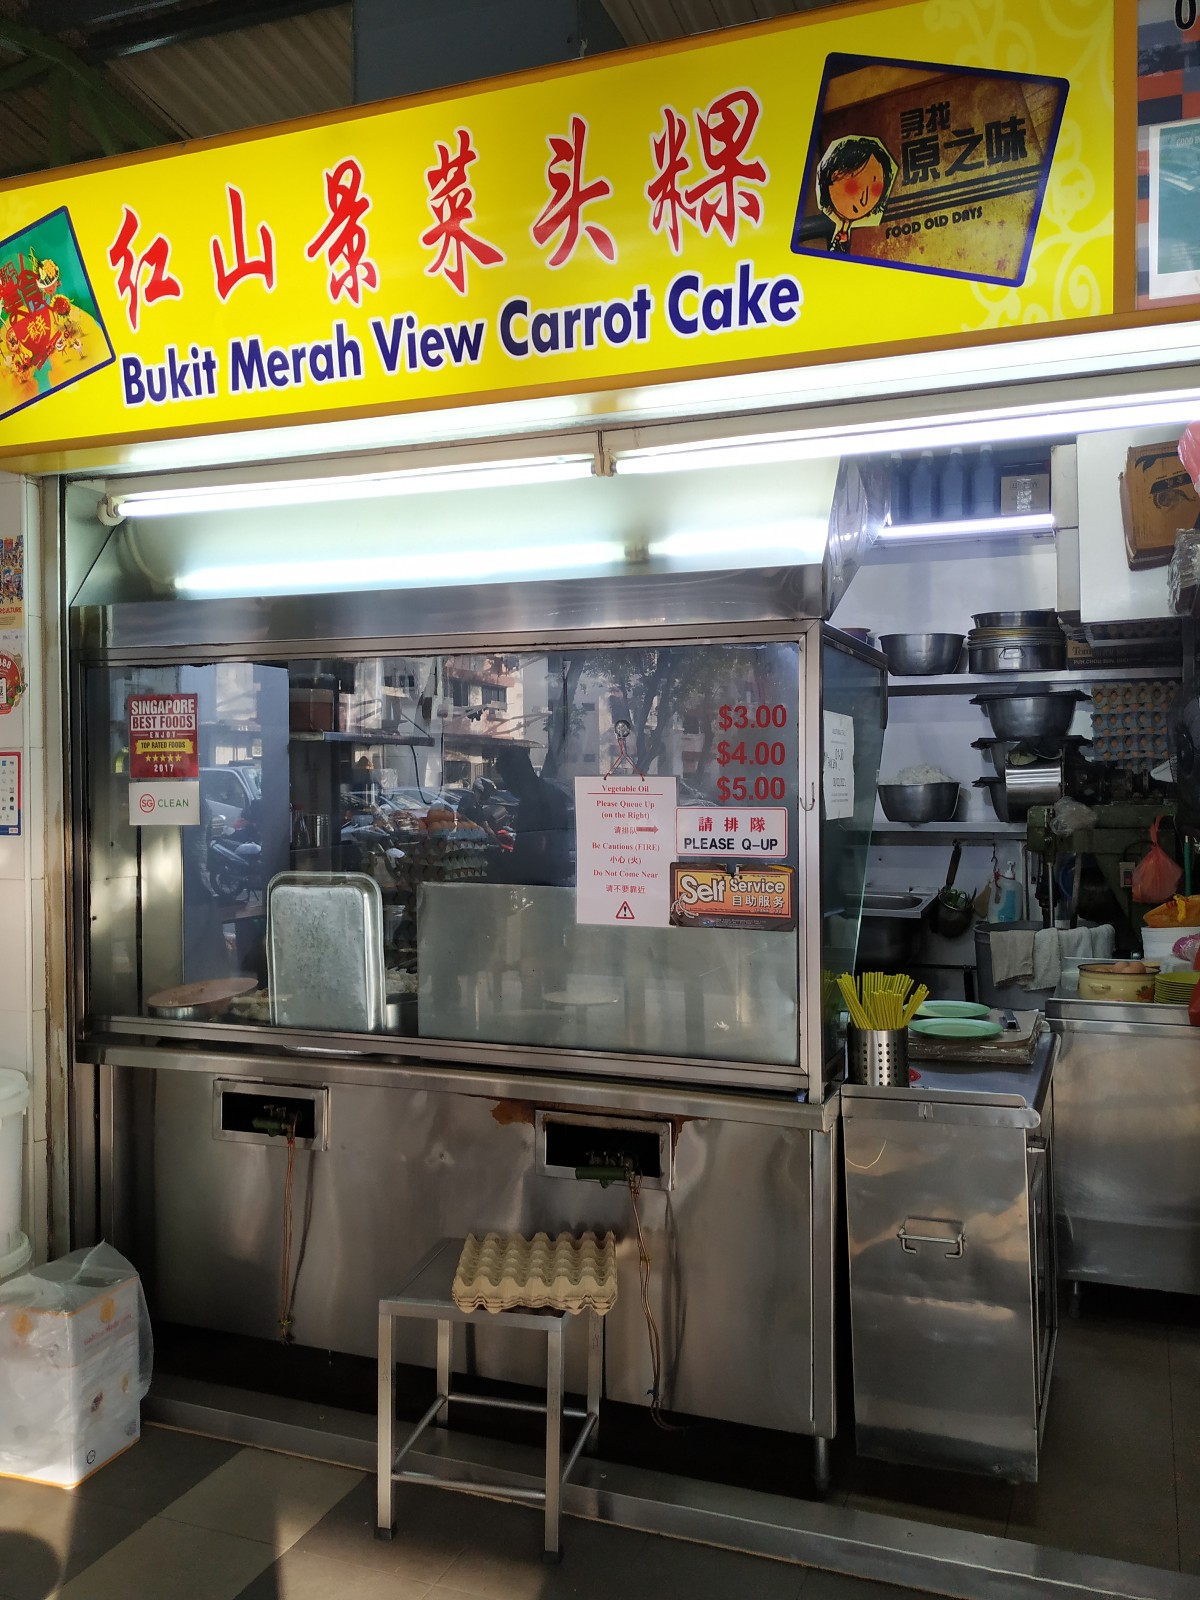 Killer old-school carrot cake @Bukit Merah View Market ...